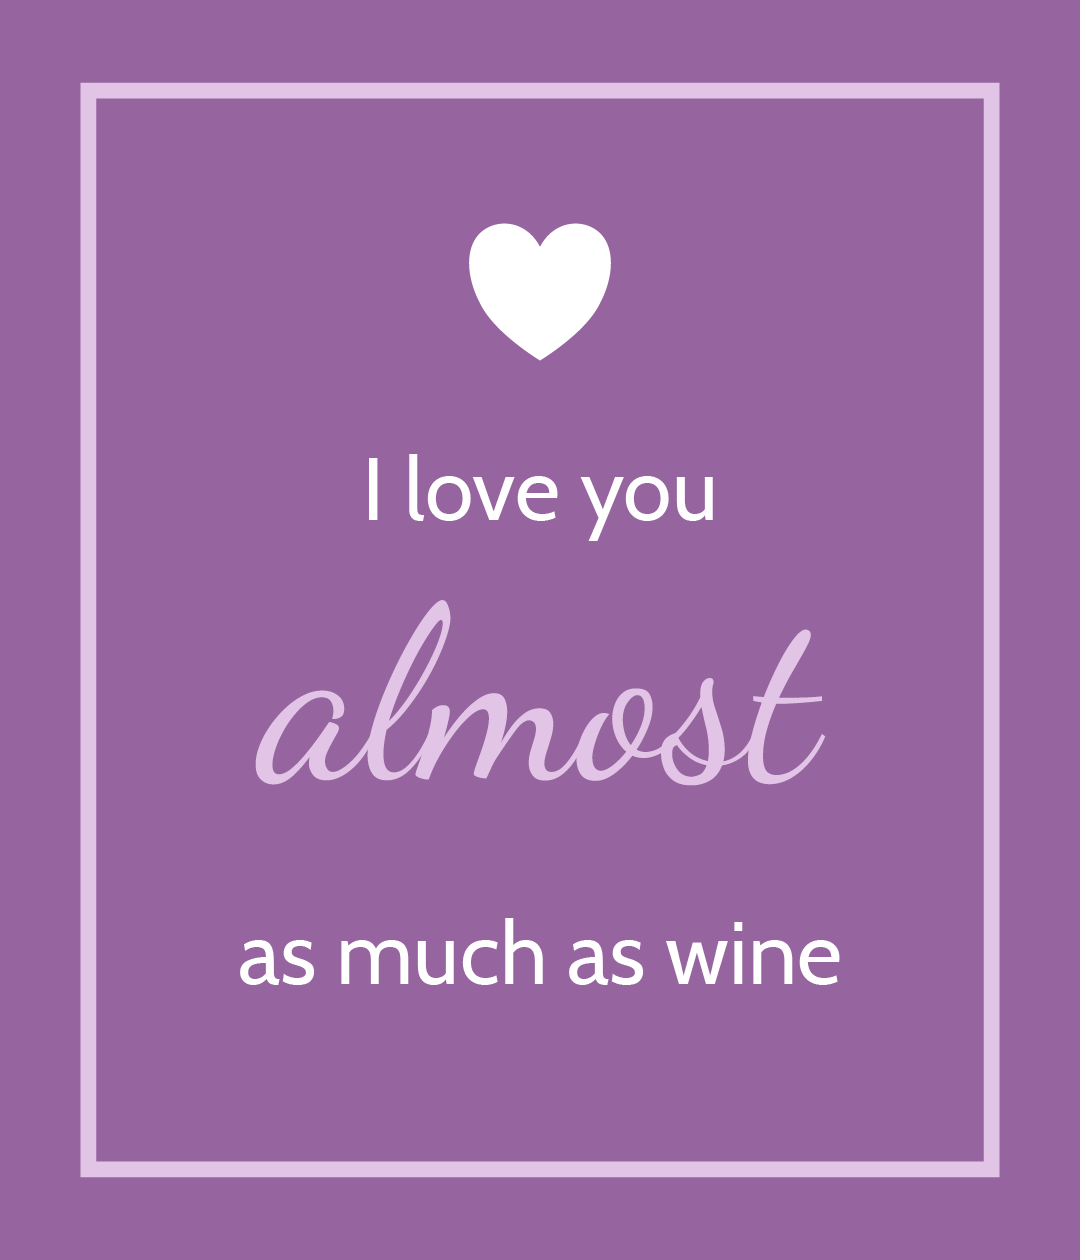 Wine Love